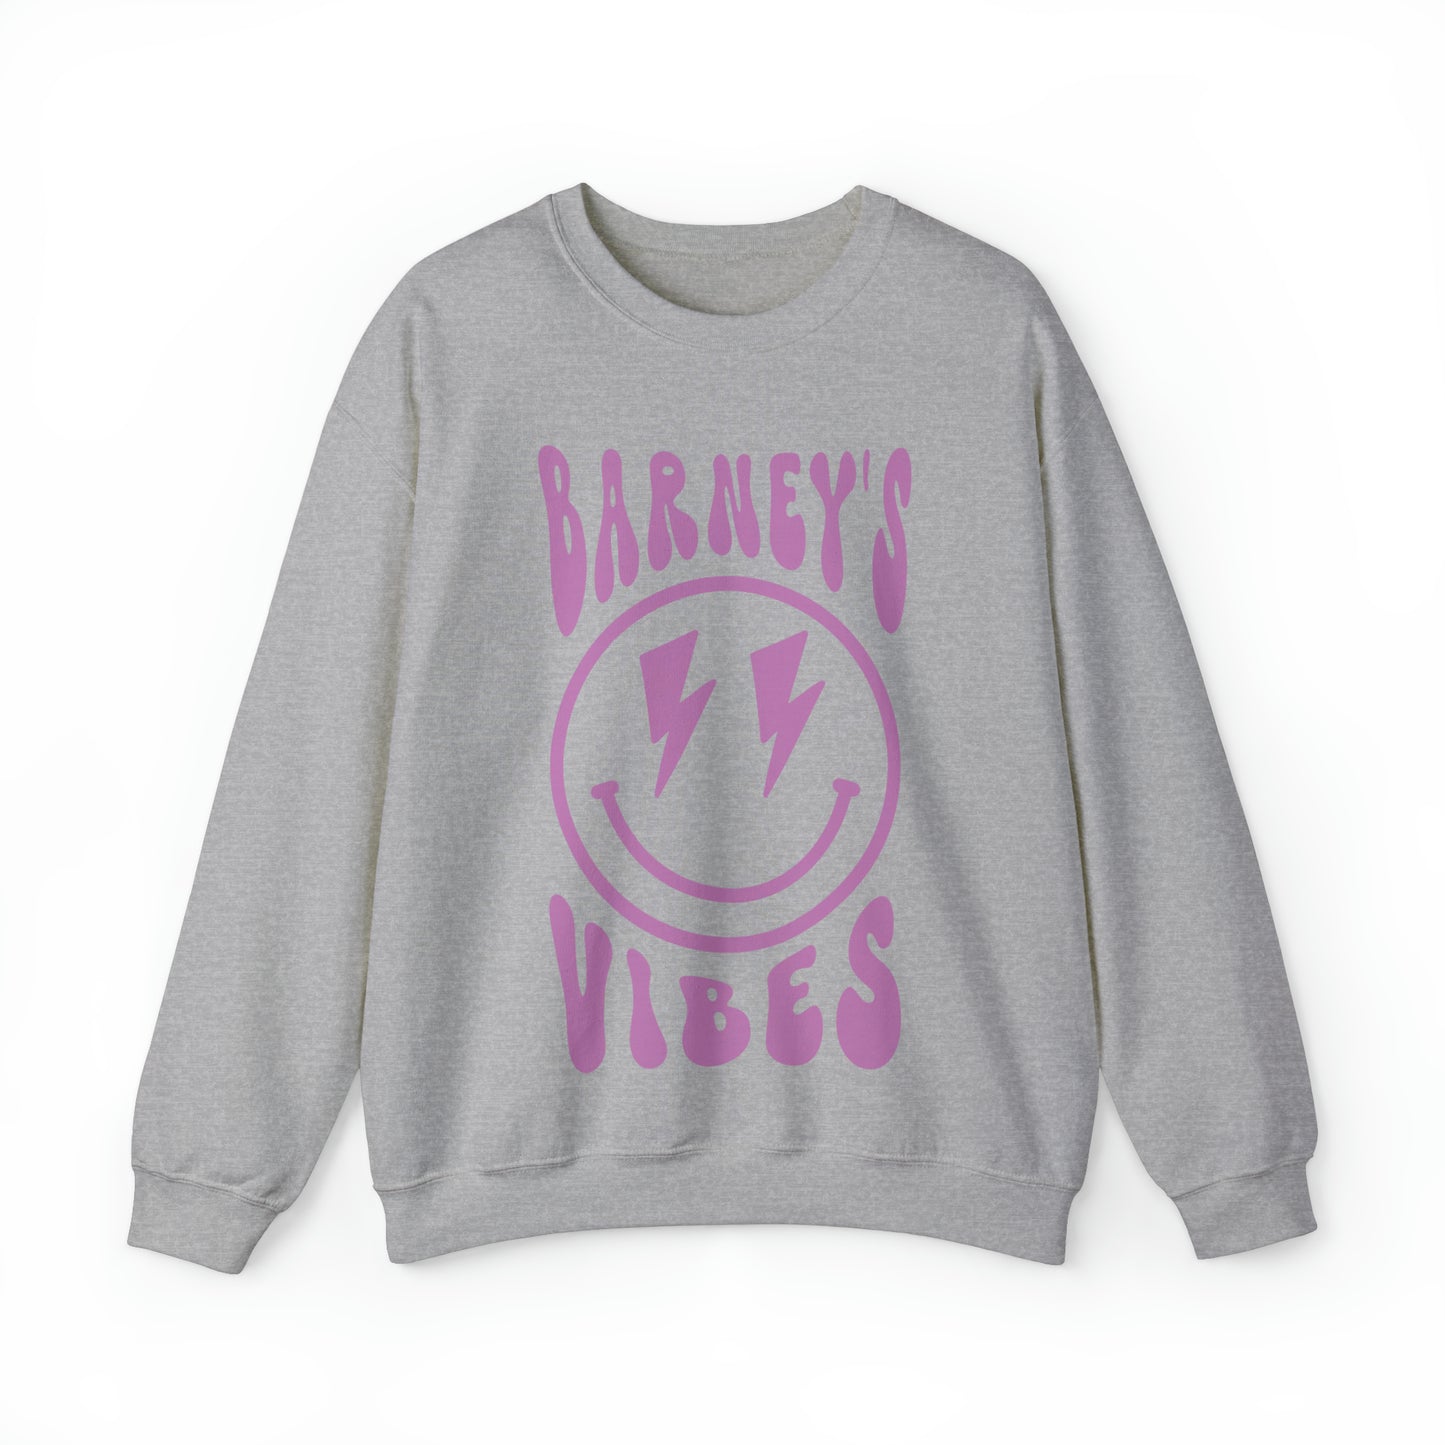 Barney's Vibes | BARNEY'S BEANERY - Women's Smiley Face Sweatshirt